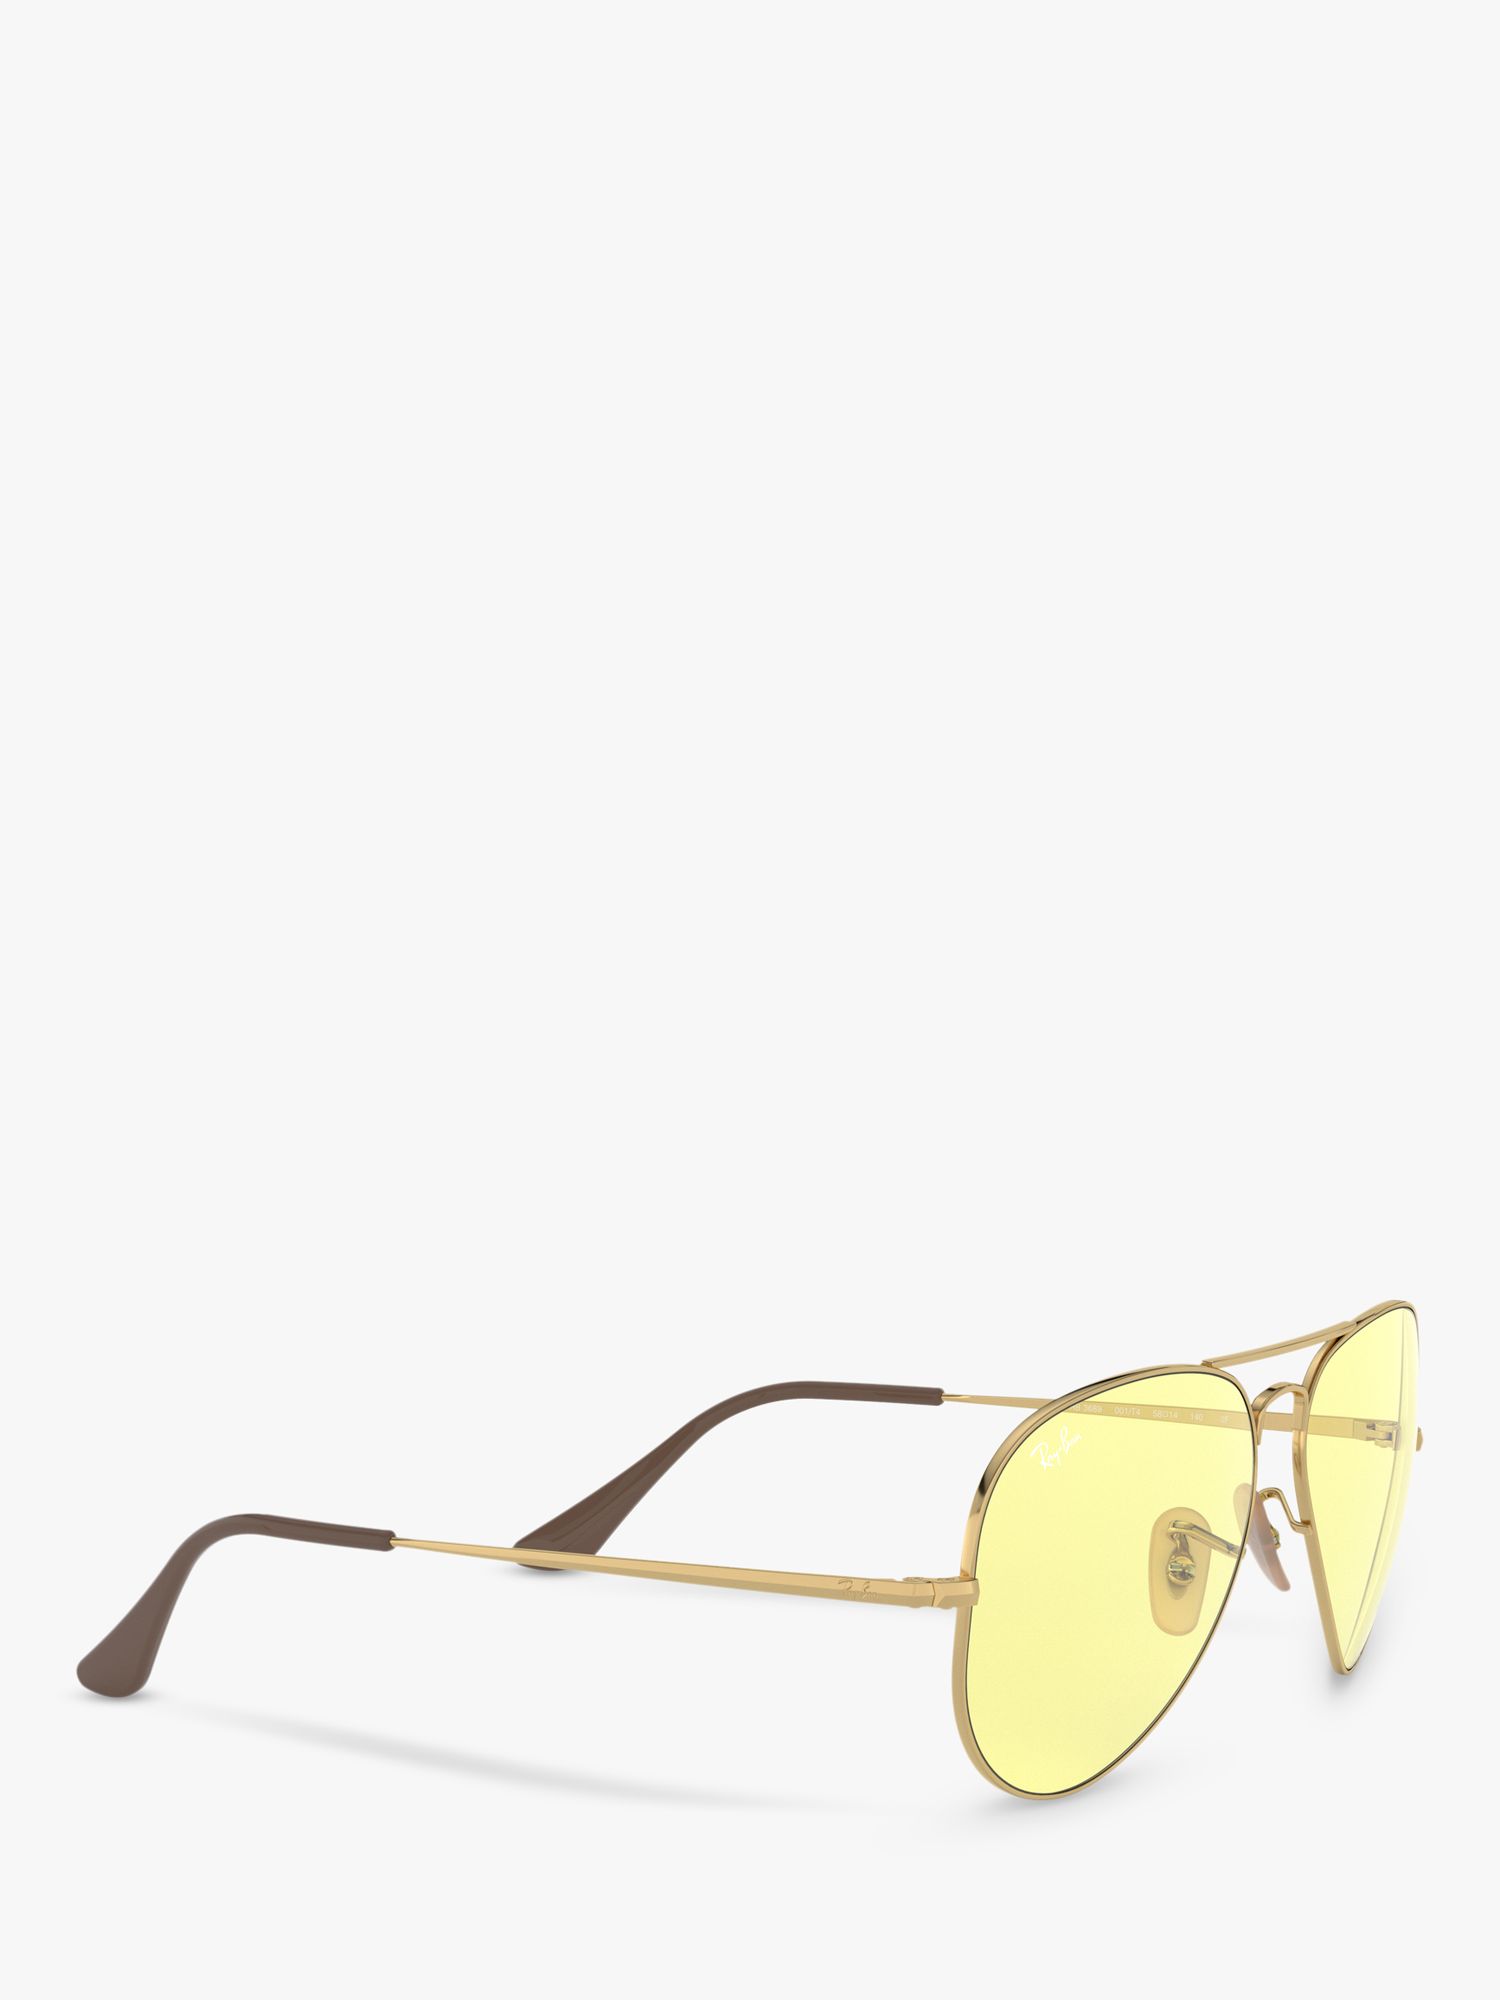 Ray-Ban RB3689 Men's Evolve Aviator Sunglasses, Gold/Light Yellow  Photochromic at John Lewis & Partners